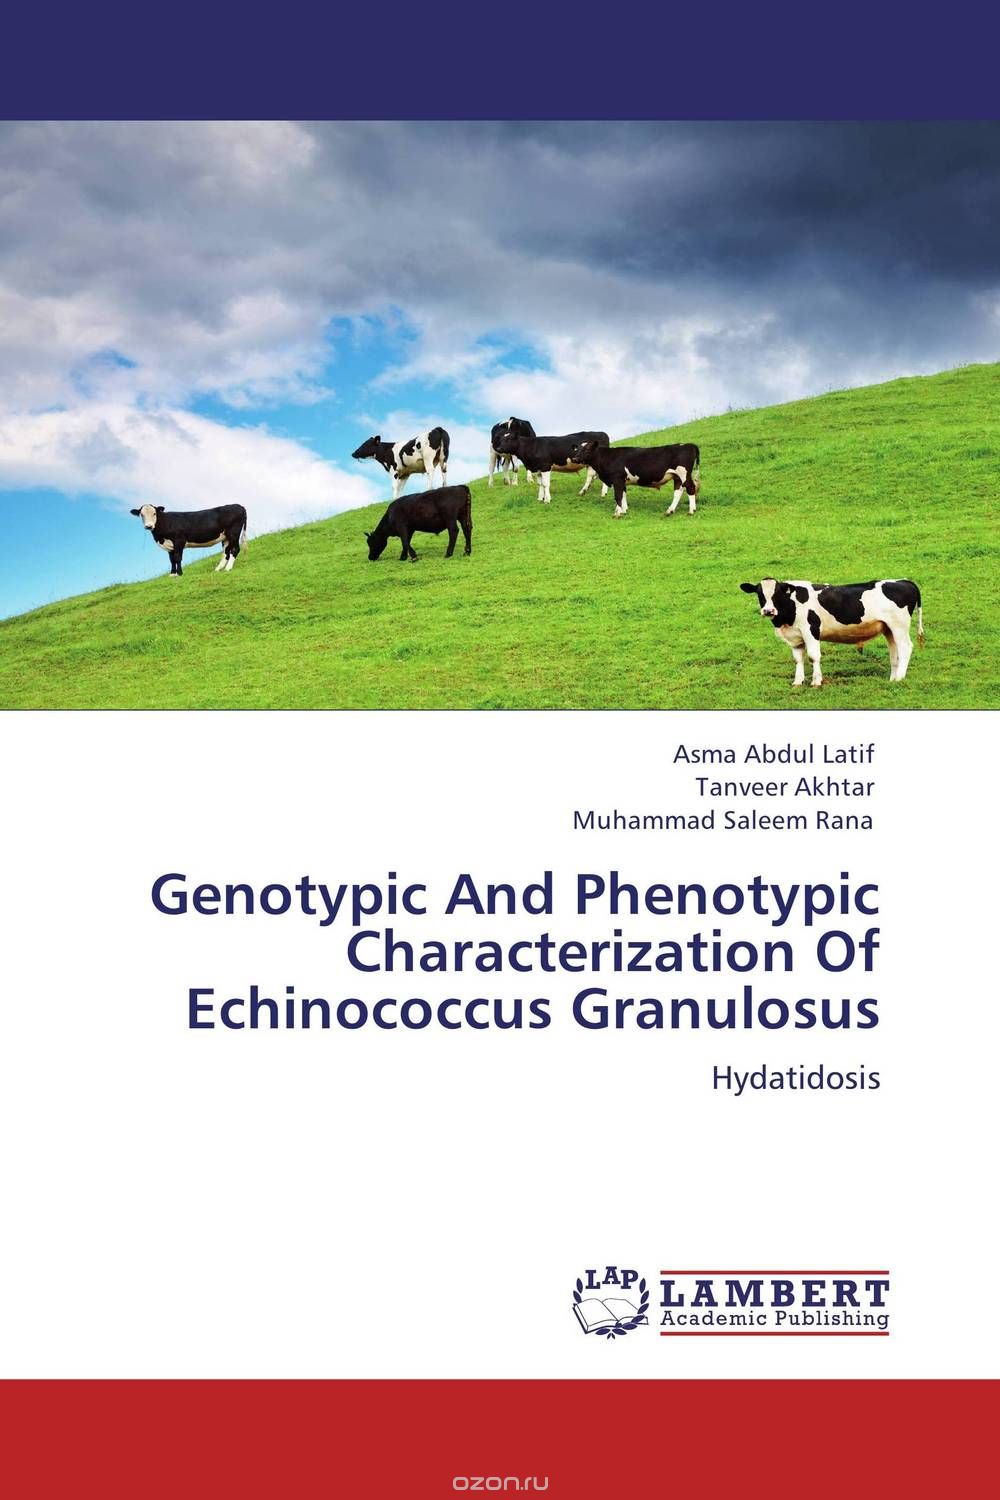 Скачать книгу "Genotypic And Phenotypic Characterization Of Echinococcus Granulosus"